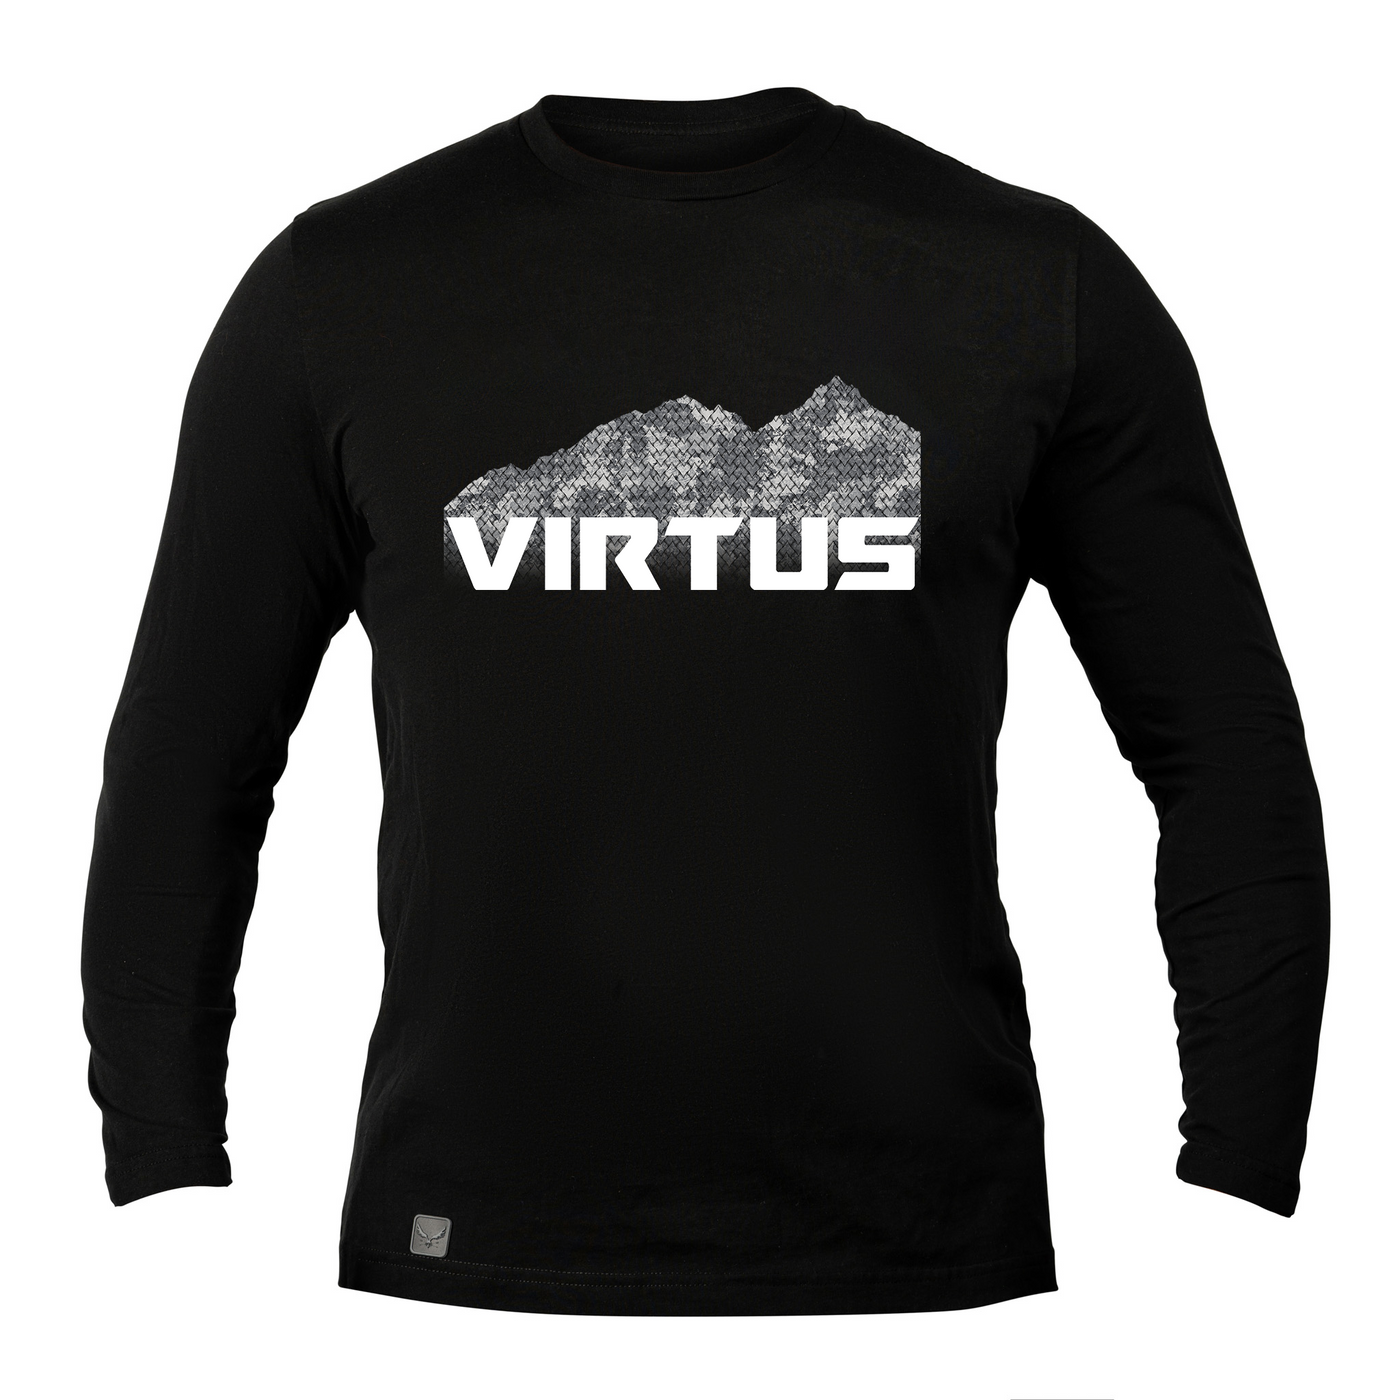 VIRTUS Long Sleeve Poly Cotton Unisex Shirt - Made in USA